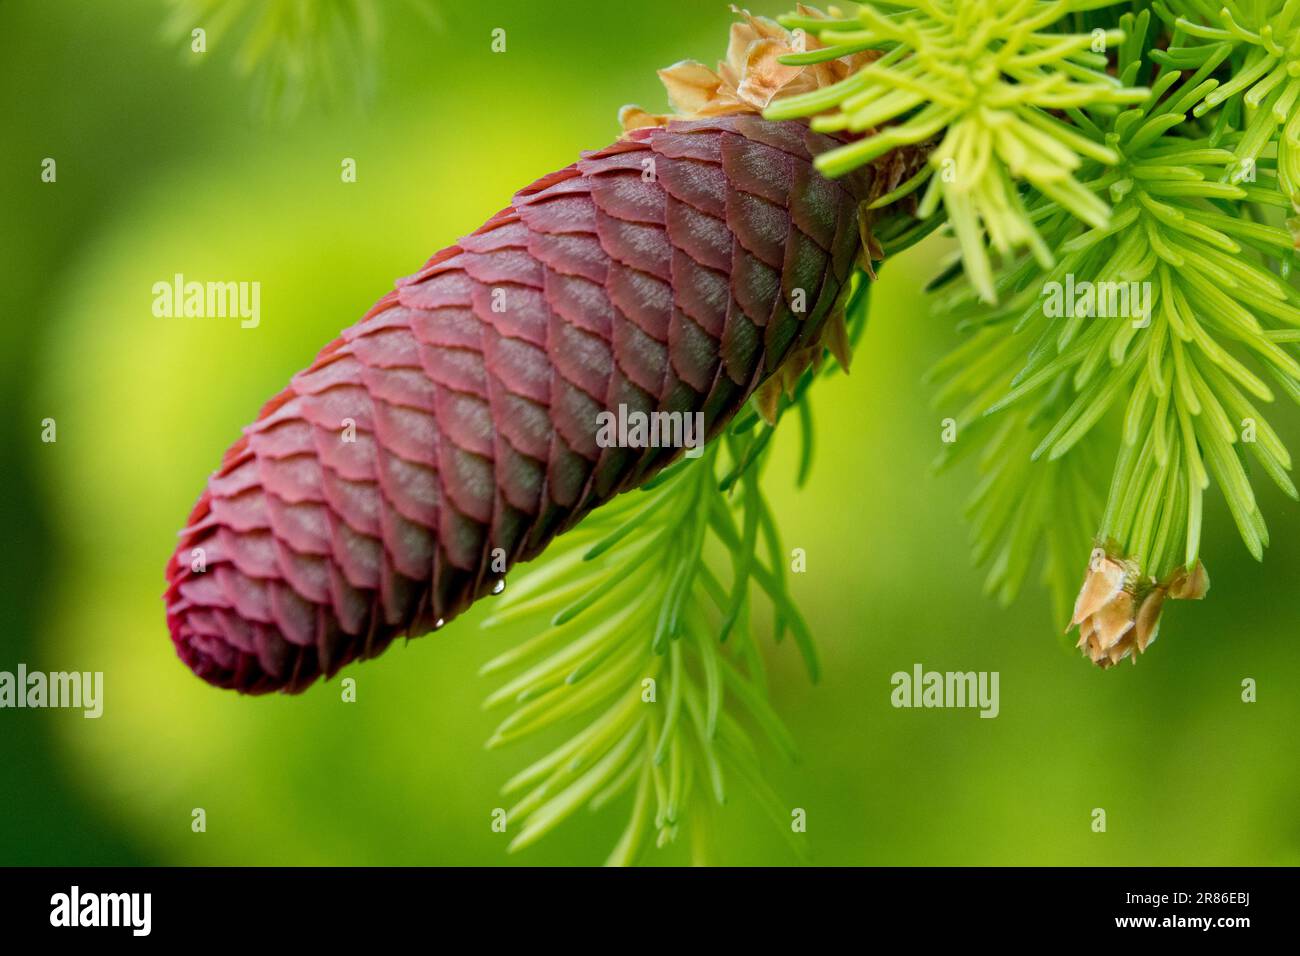 Picea abies 'Aurea' Norway spruce, Picea abies cone Spruce Stock Photo